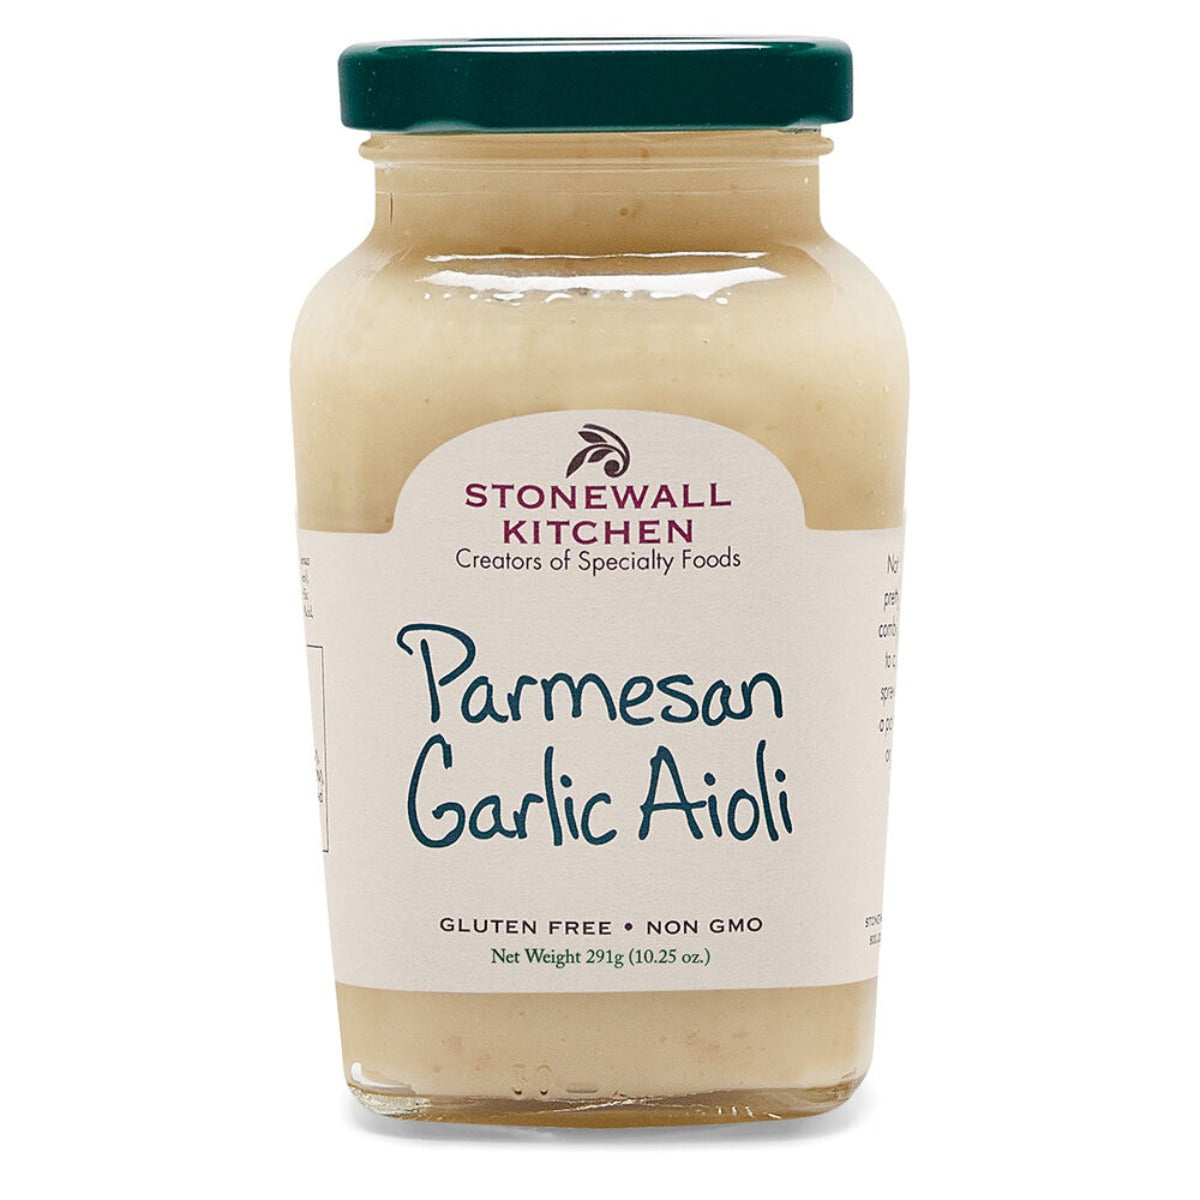 Parmesan Garlic Aoili